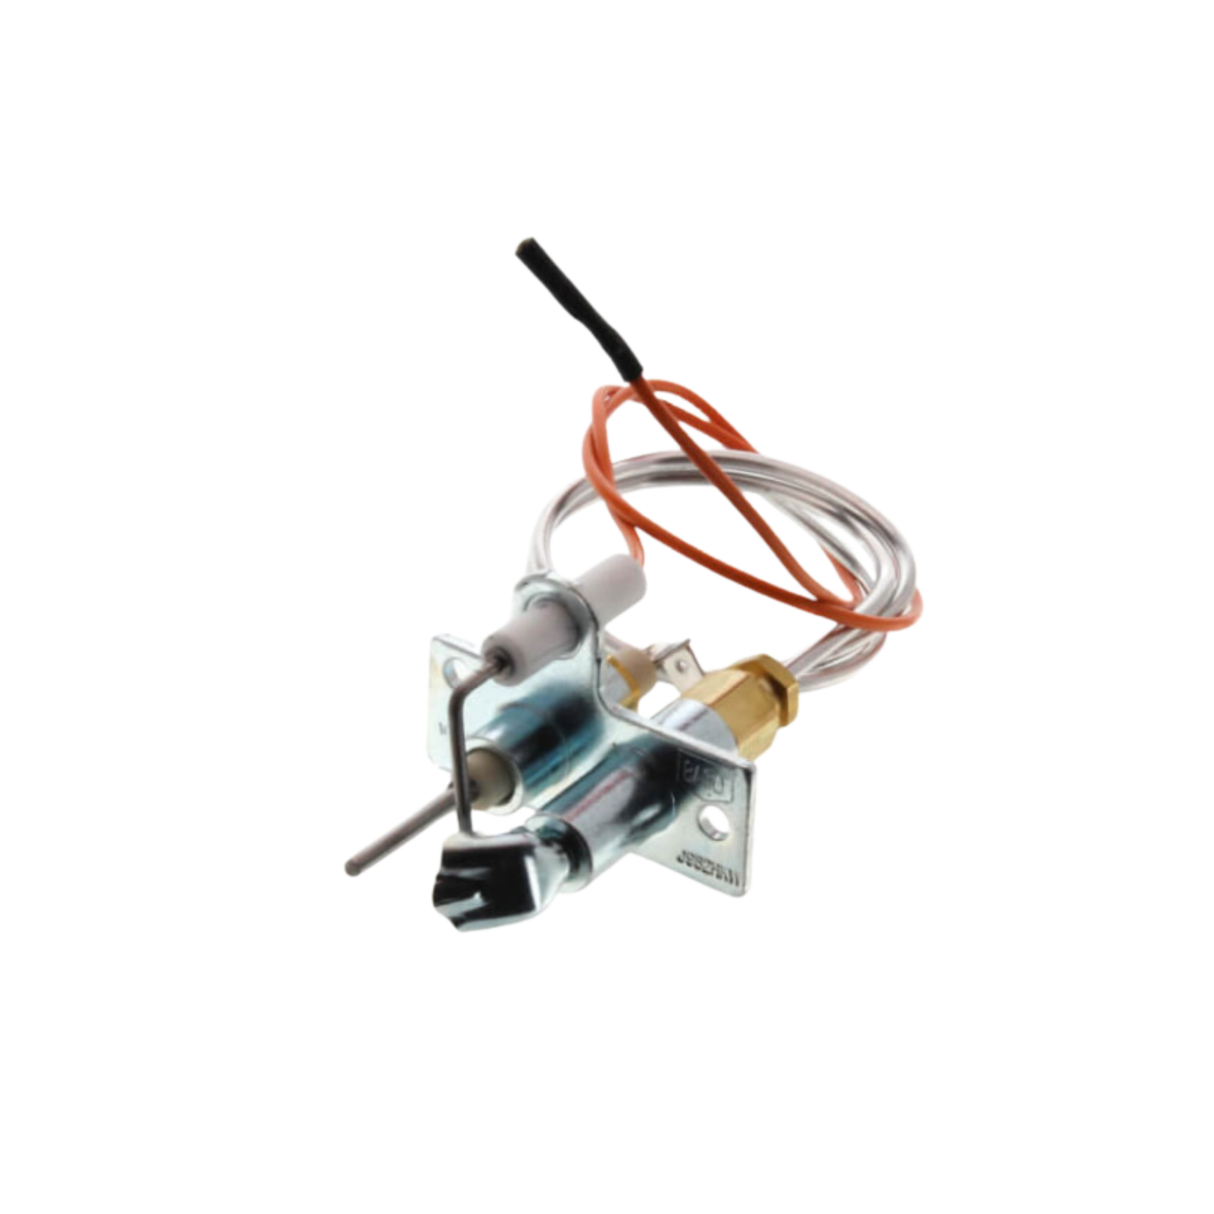 Baso Q90FF-1 0.032", 18" Cable Length, Pilot Assembly and Sensor